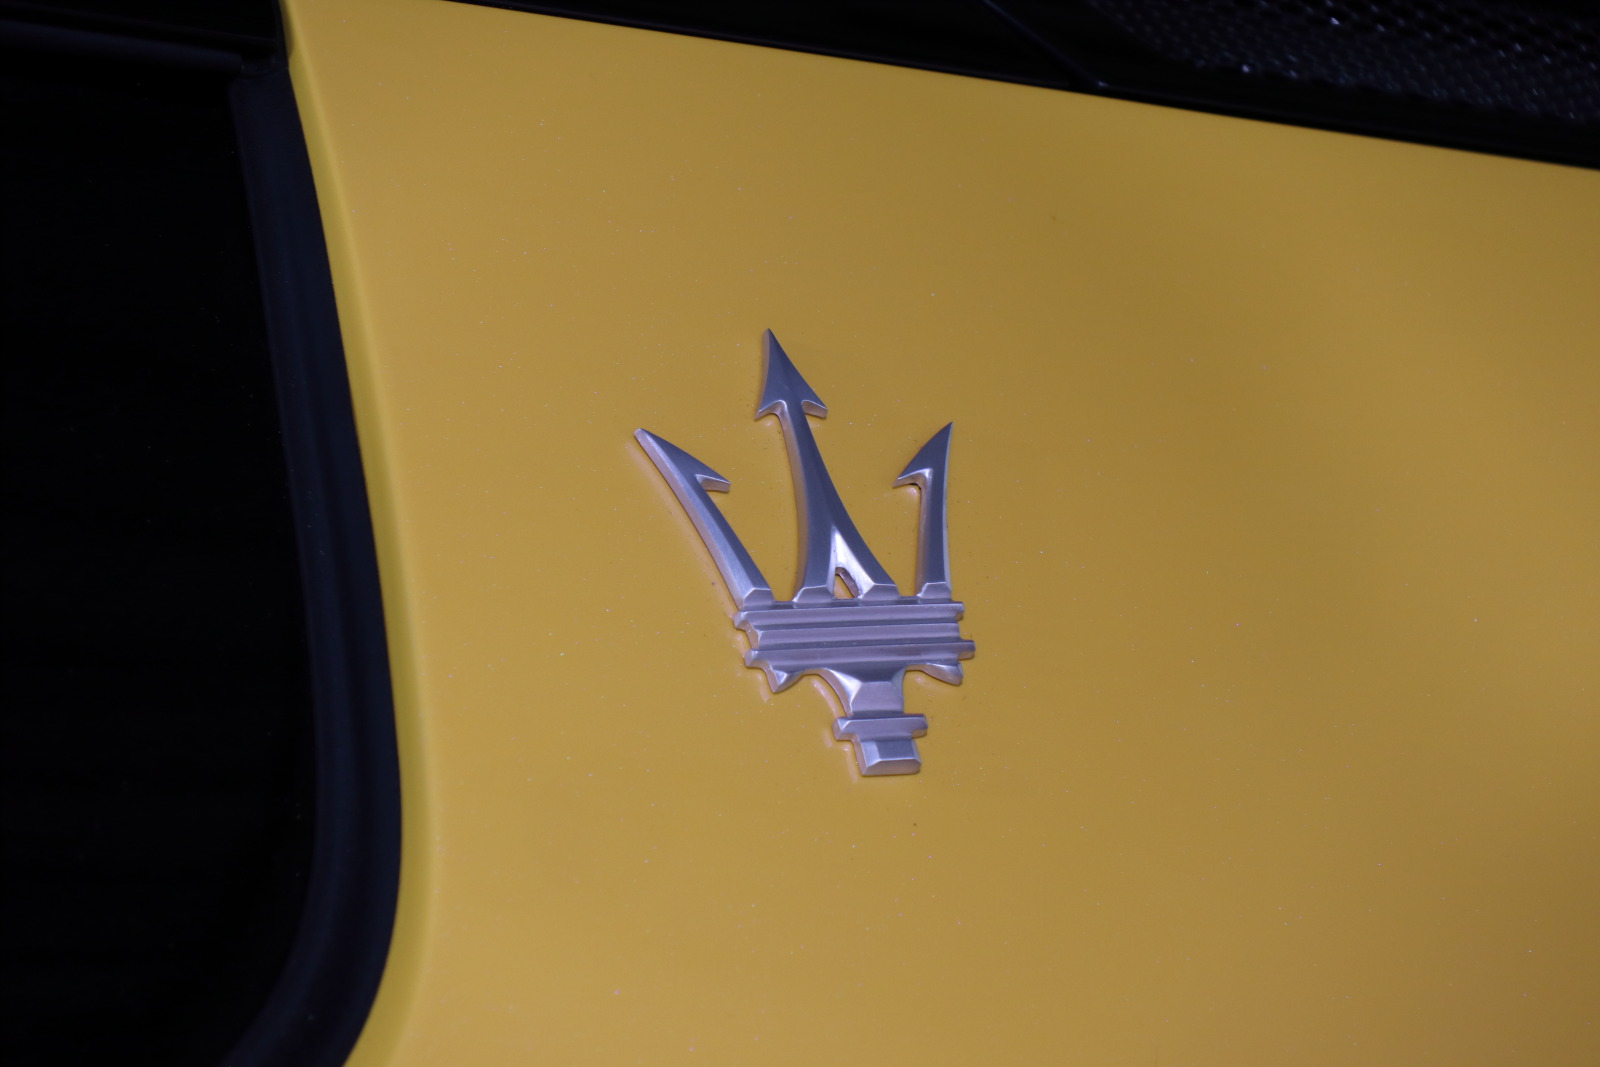 Maserati Mc20 014 20200910 画像 マセラティmc20がスーパースポーツでありながらエレガントに映る理由は Maserati Mc20画像ギャラリー Clicccar Com